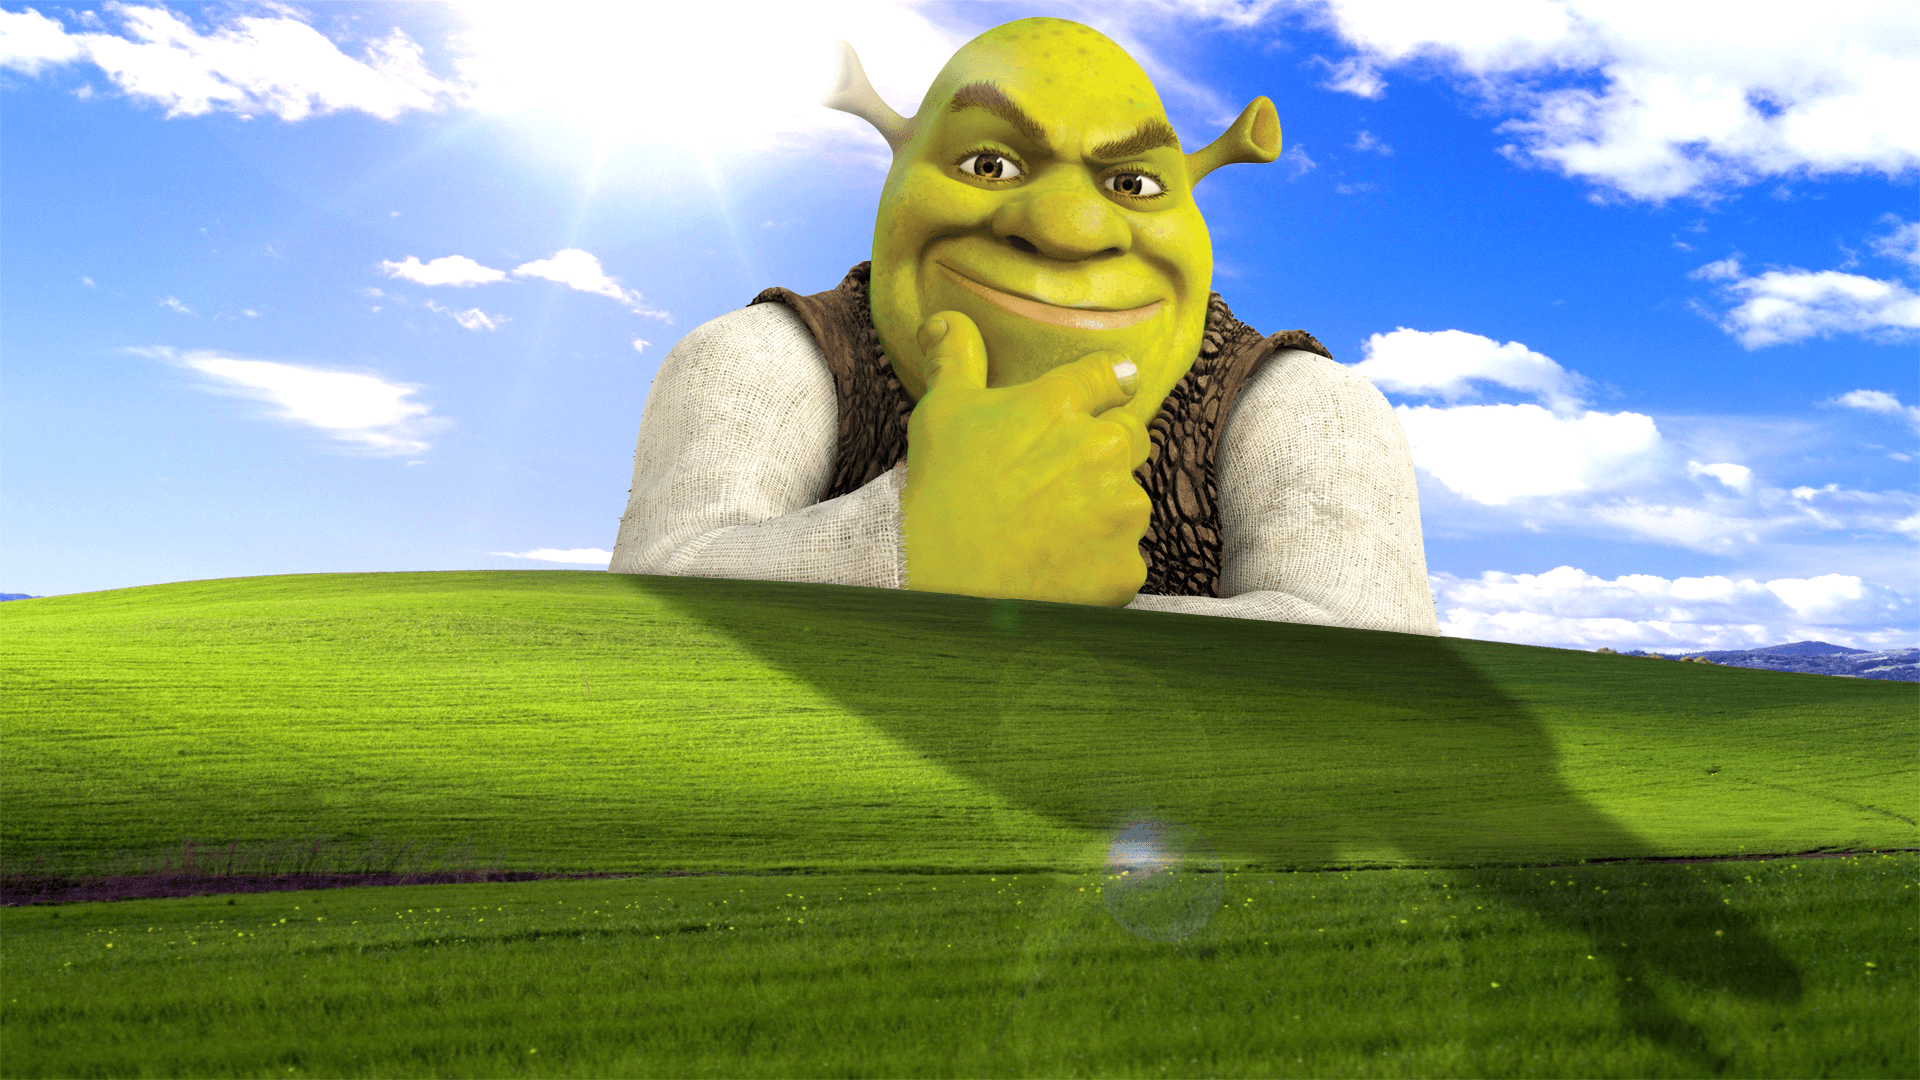 Shrek Meme Wallpaper 73806 1920x1080px